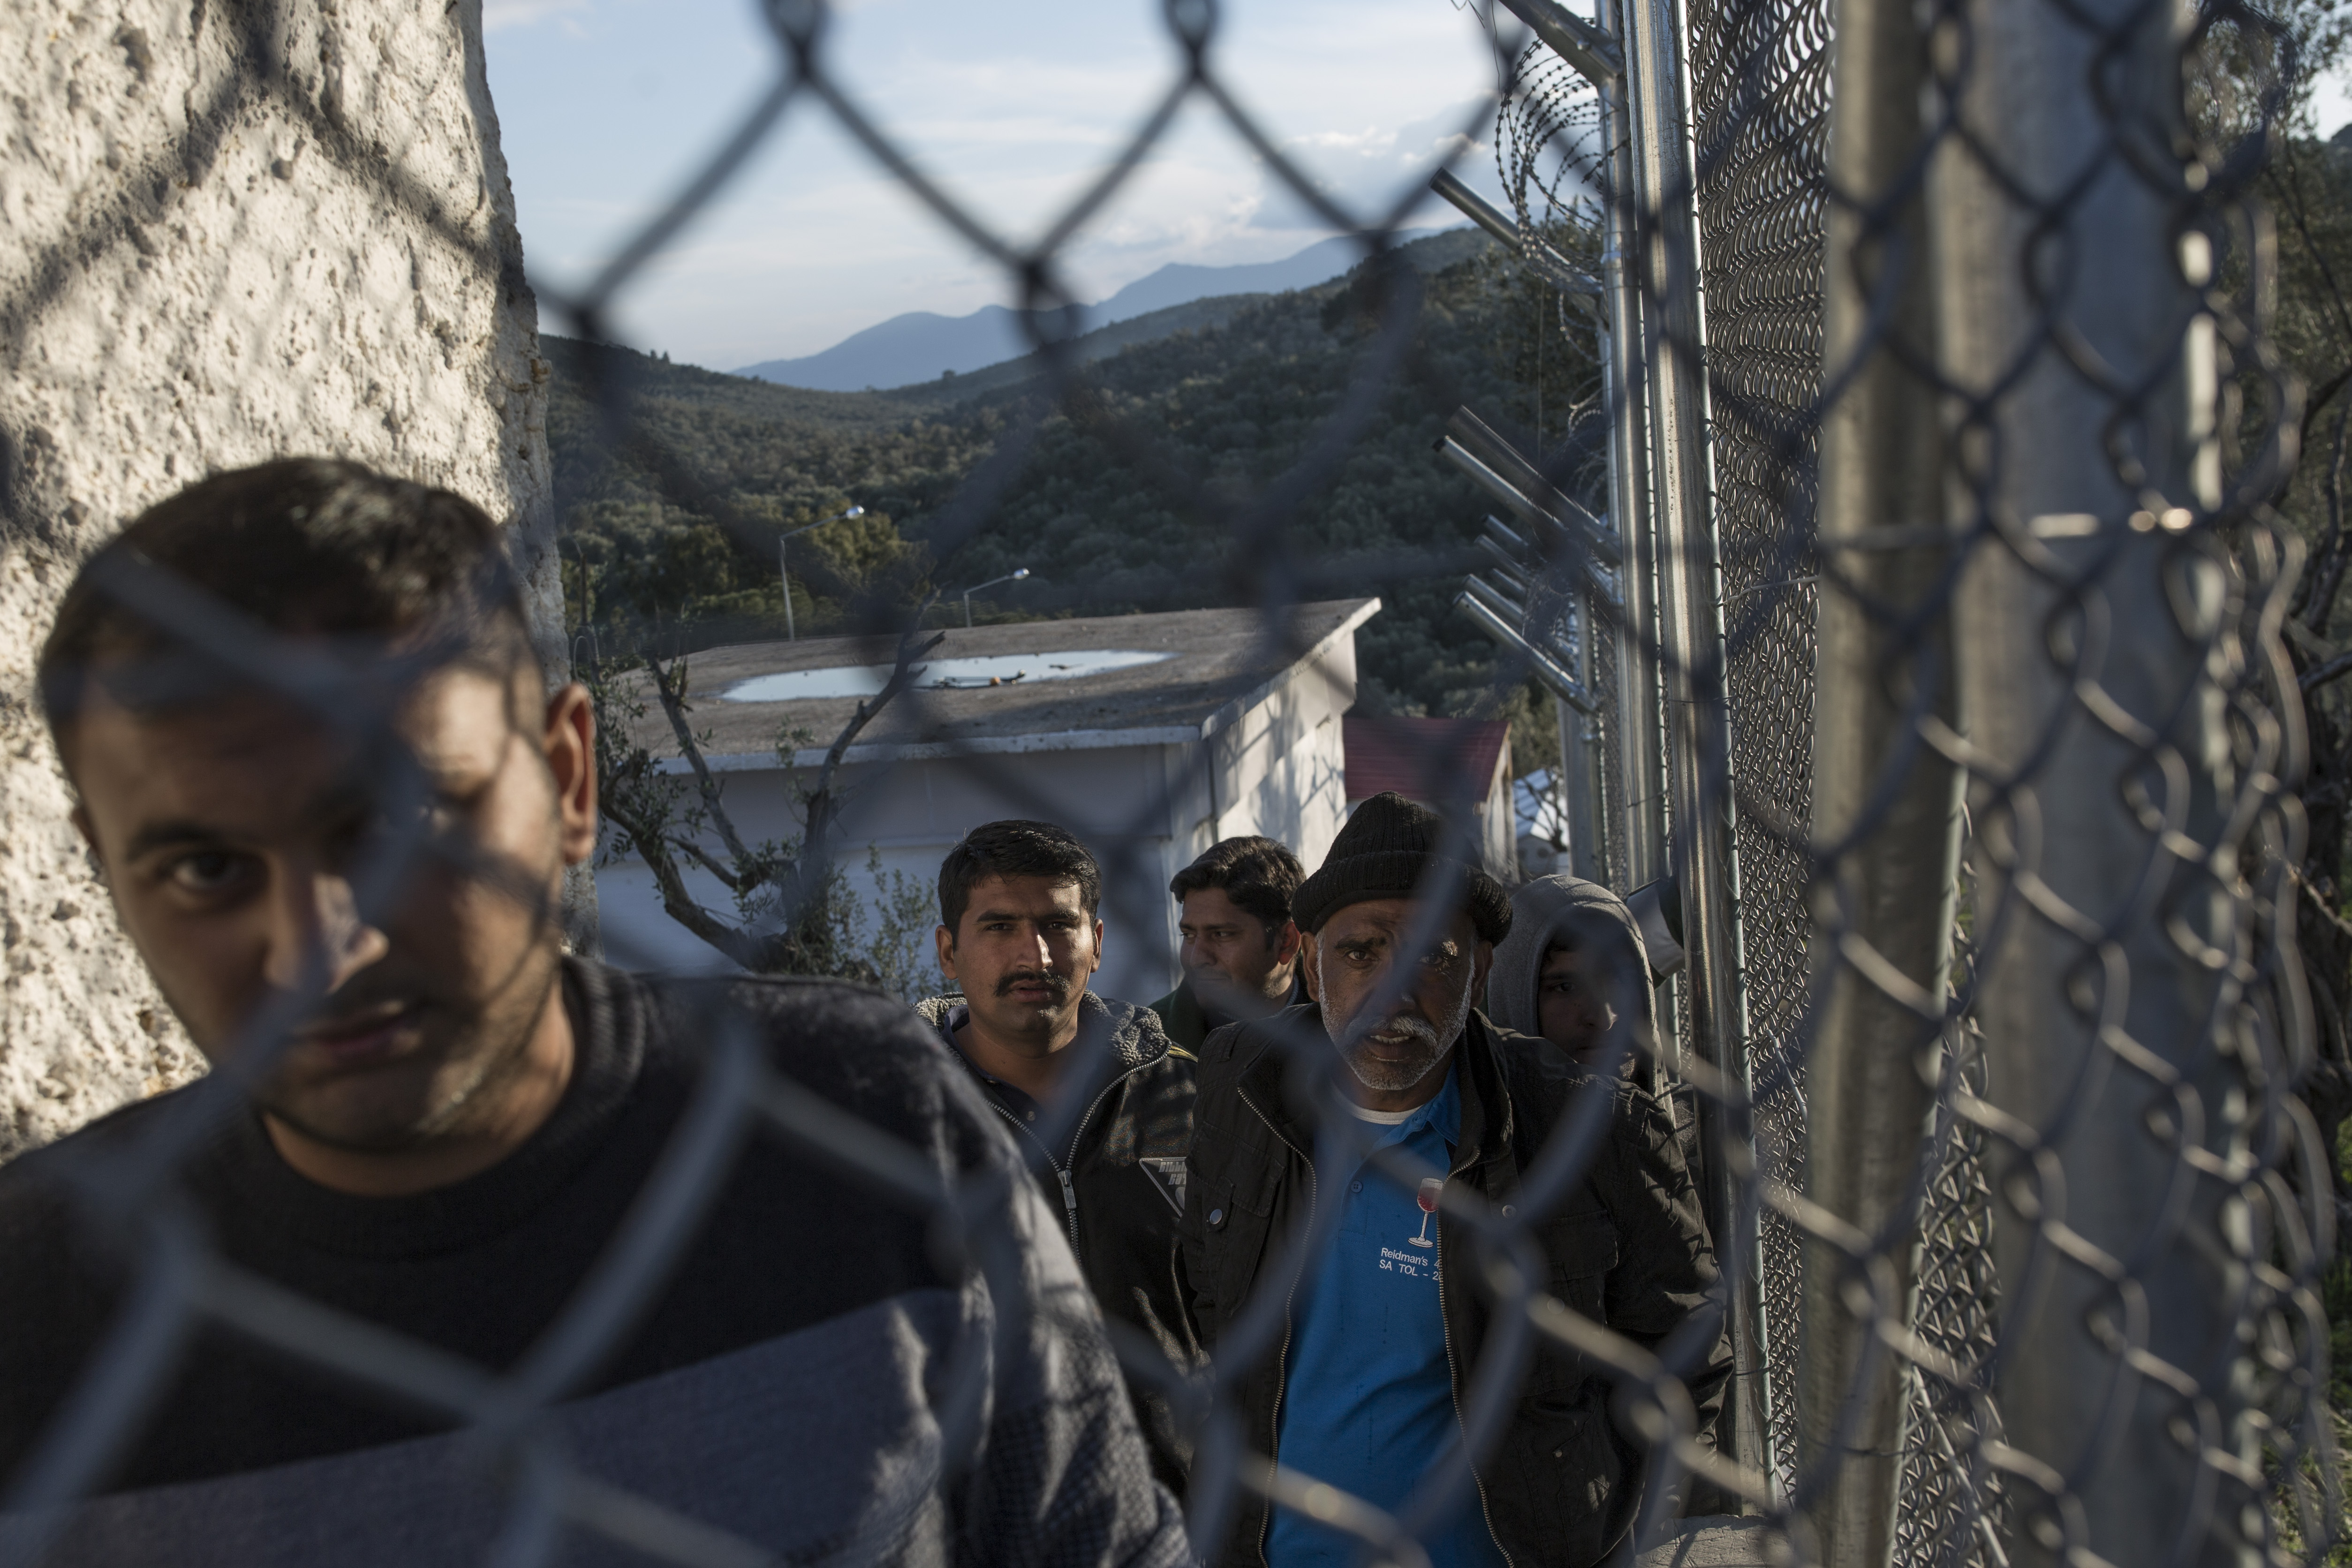 Griechenland plant große Flüchtlingslager: Platzen des Türkei-Deals befürchtet